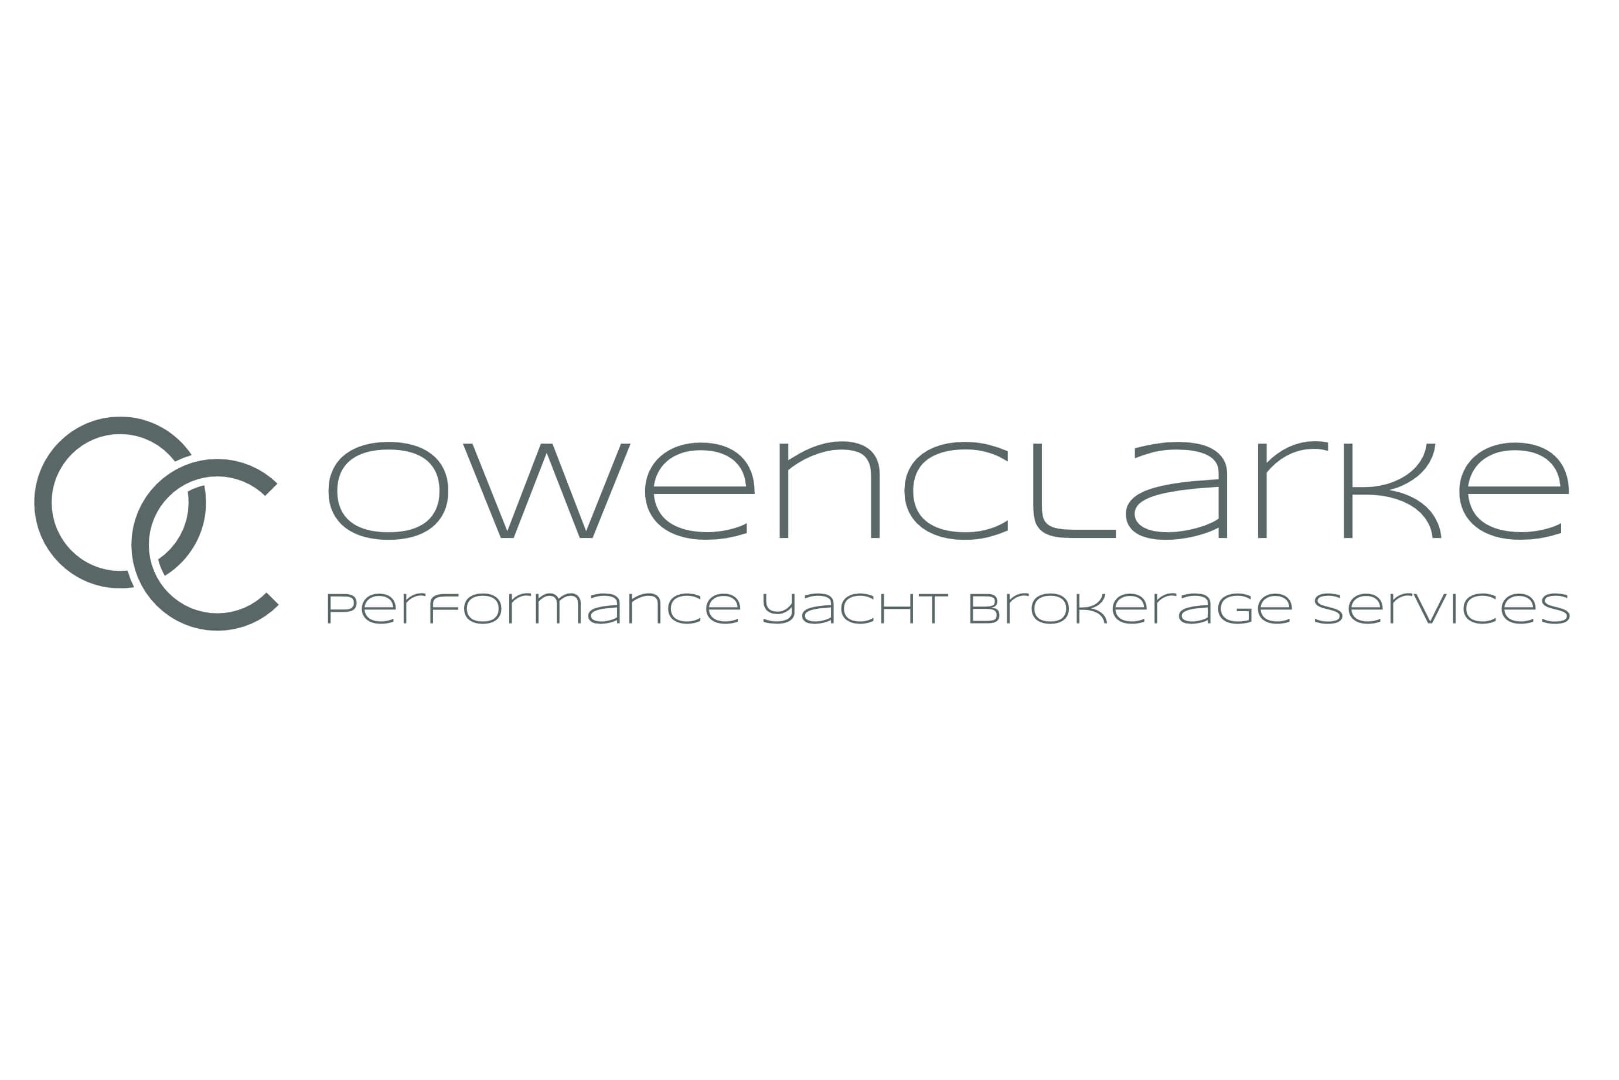 Owen Clarke Design | Toolkit Websites Logo Design Services